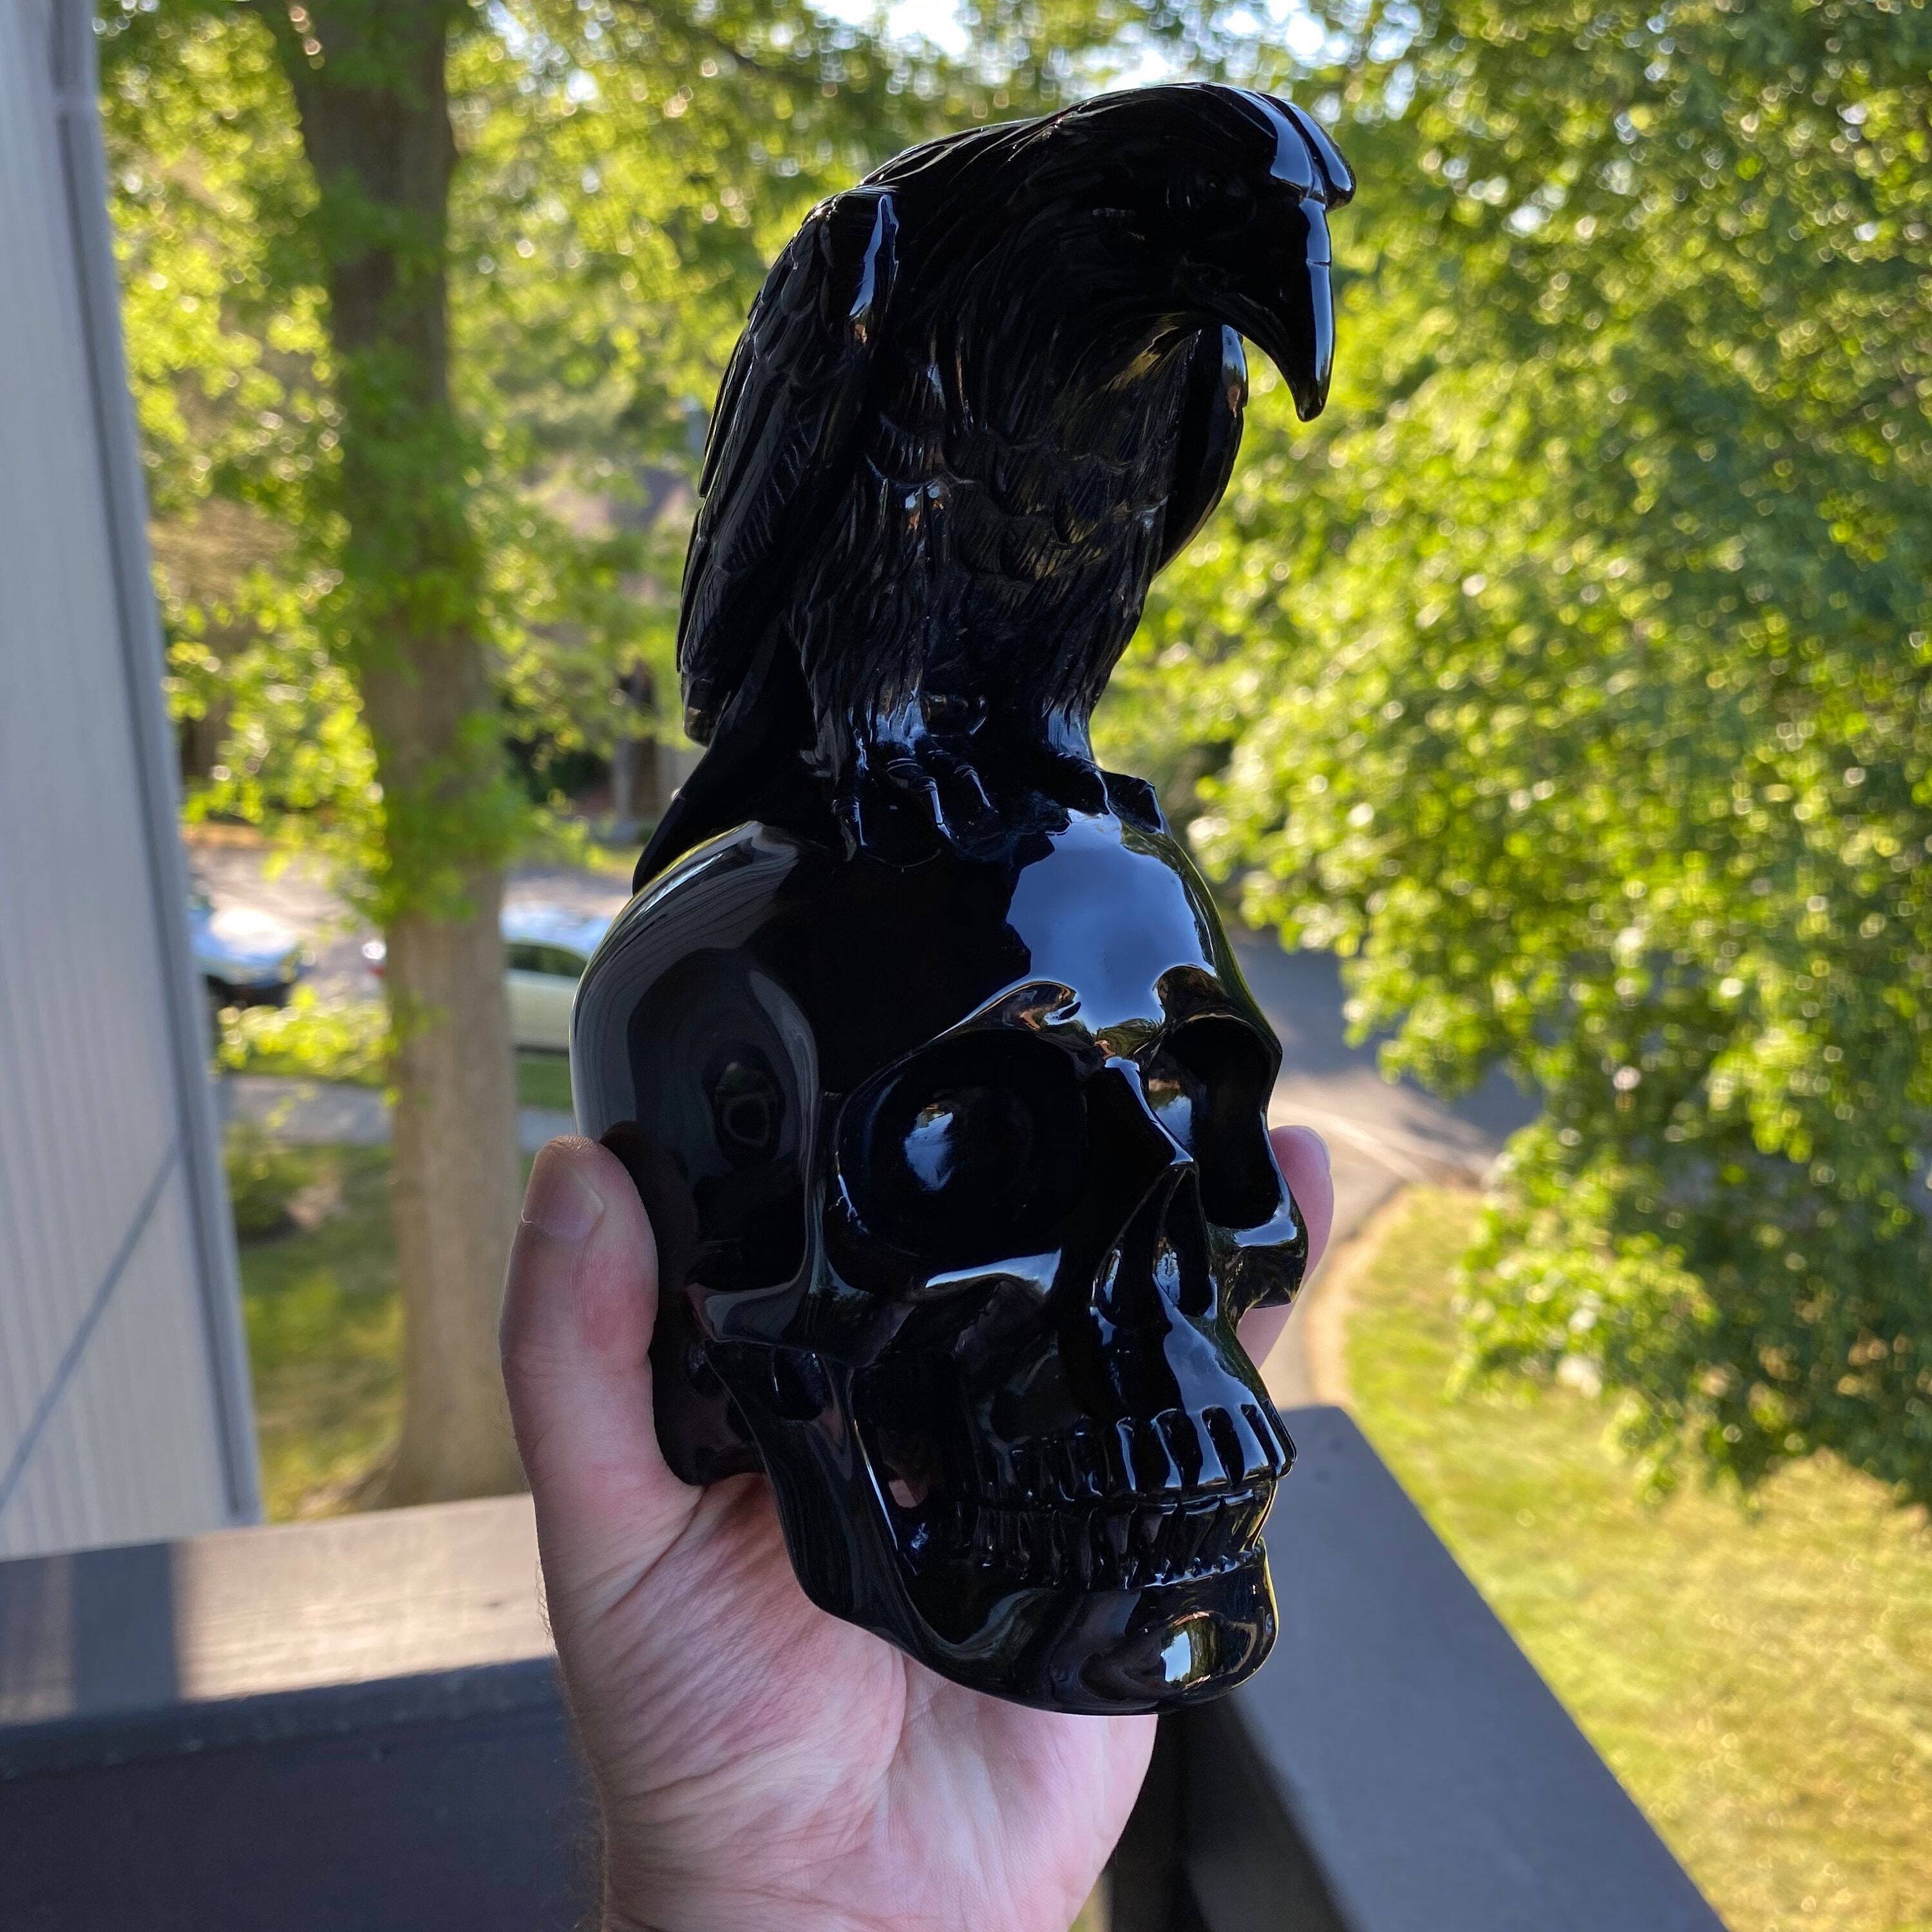 Black Obsidian Crystal Skull and Raven?